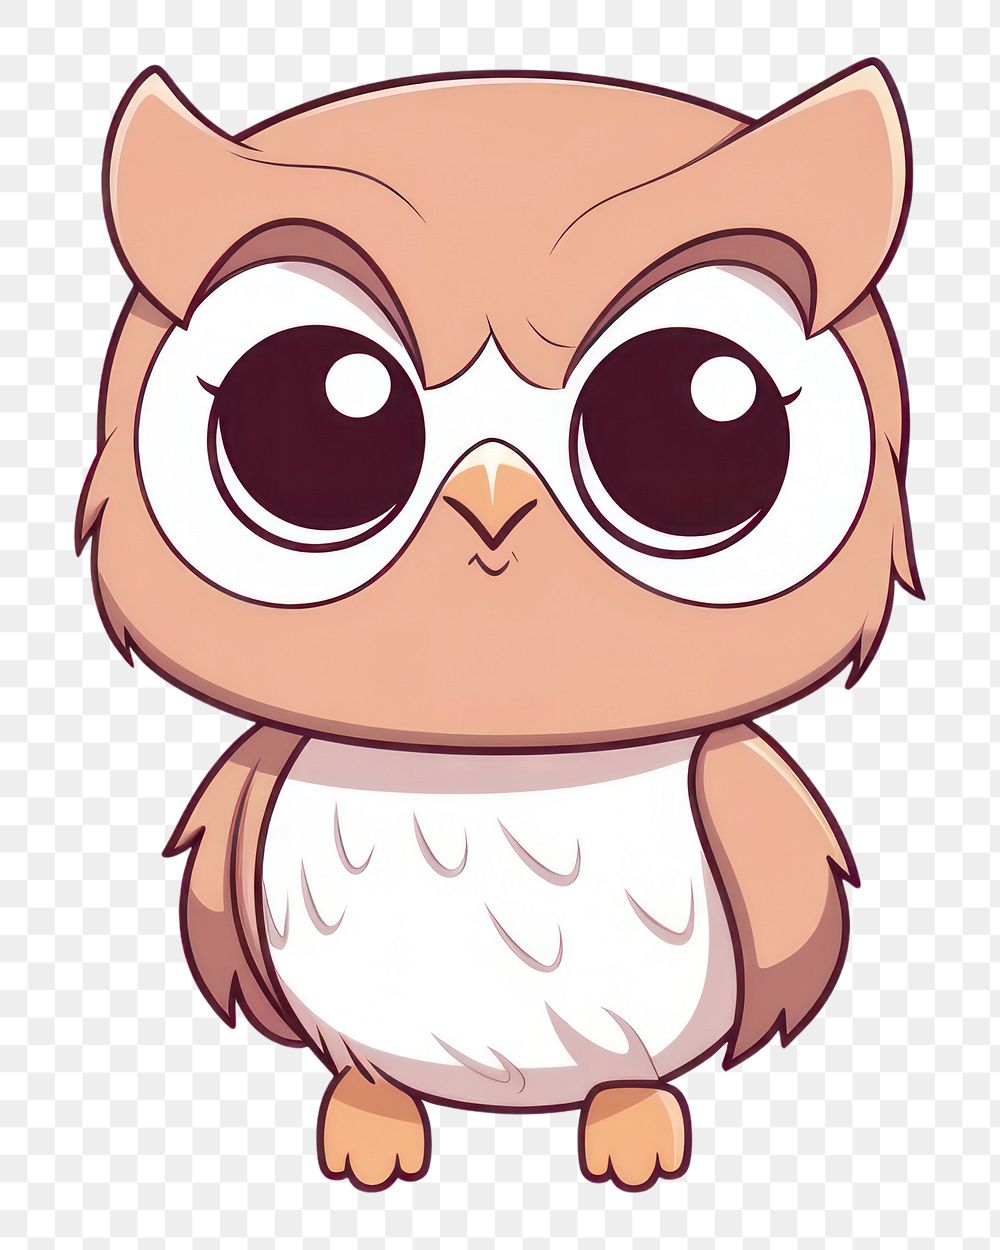 Owl cartoon style animal drawing cute.